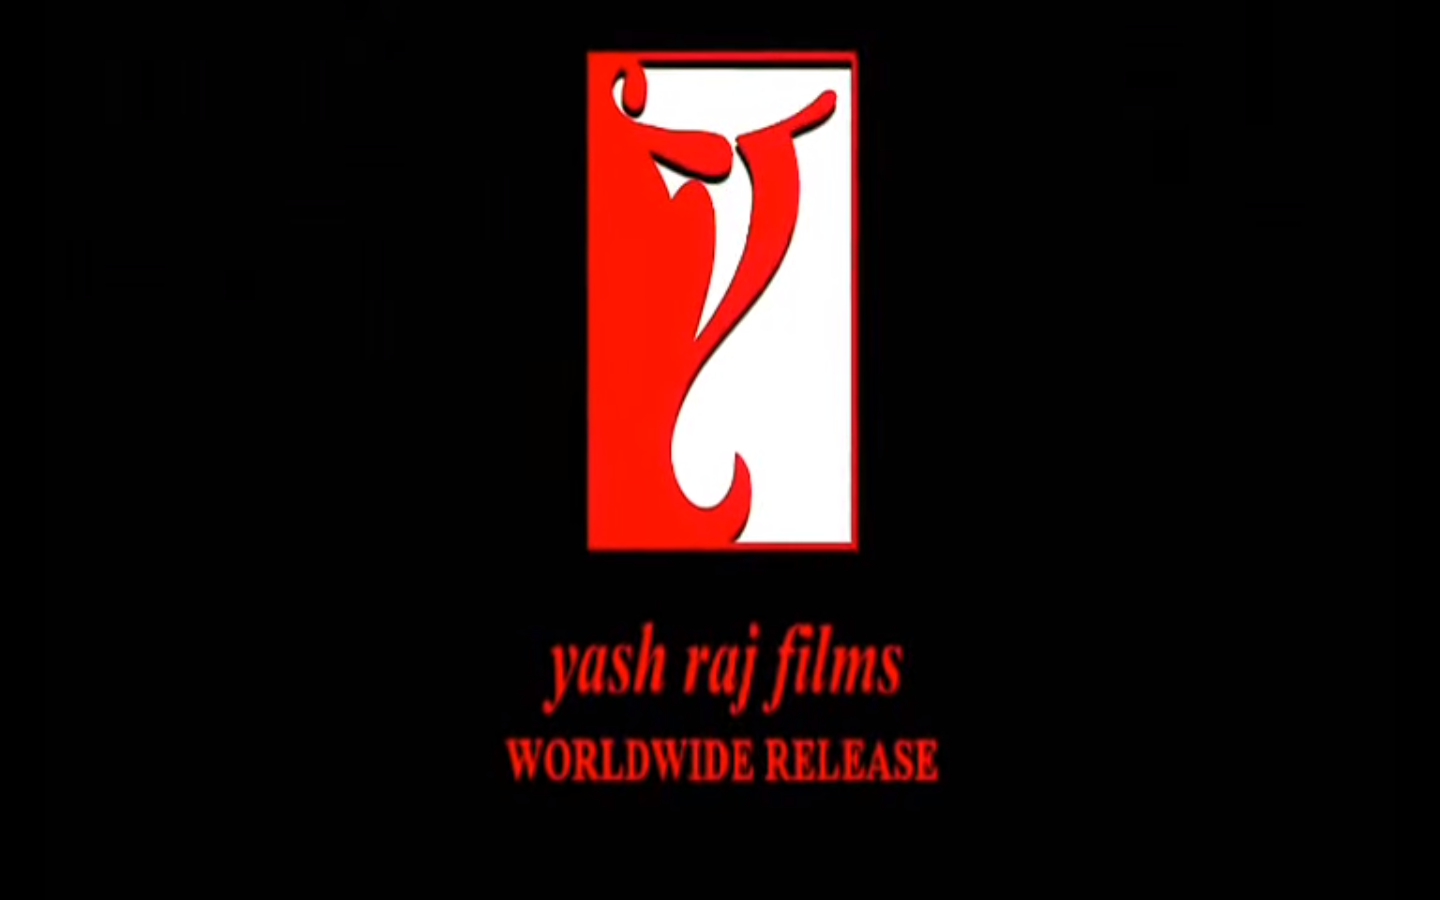 Yash Raj Films Worldwide Release (India). Closing Logo Group